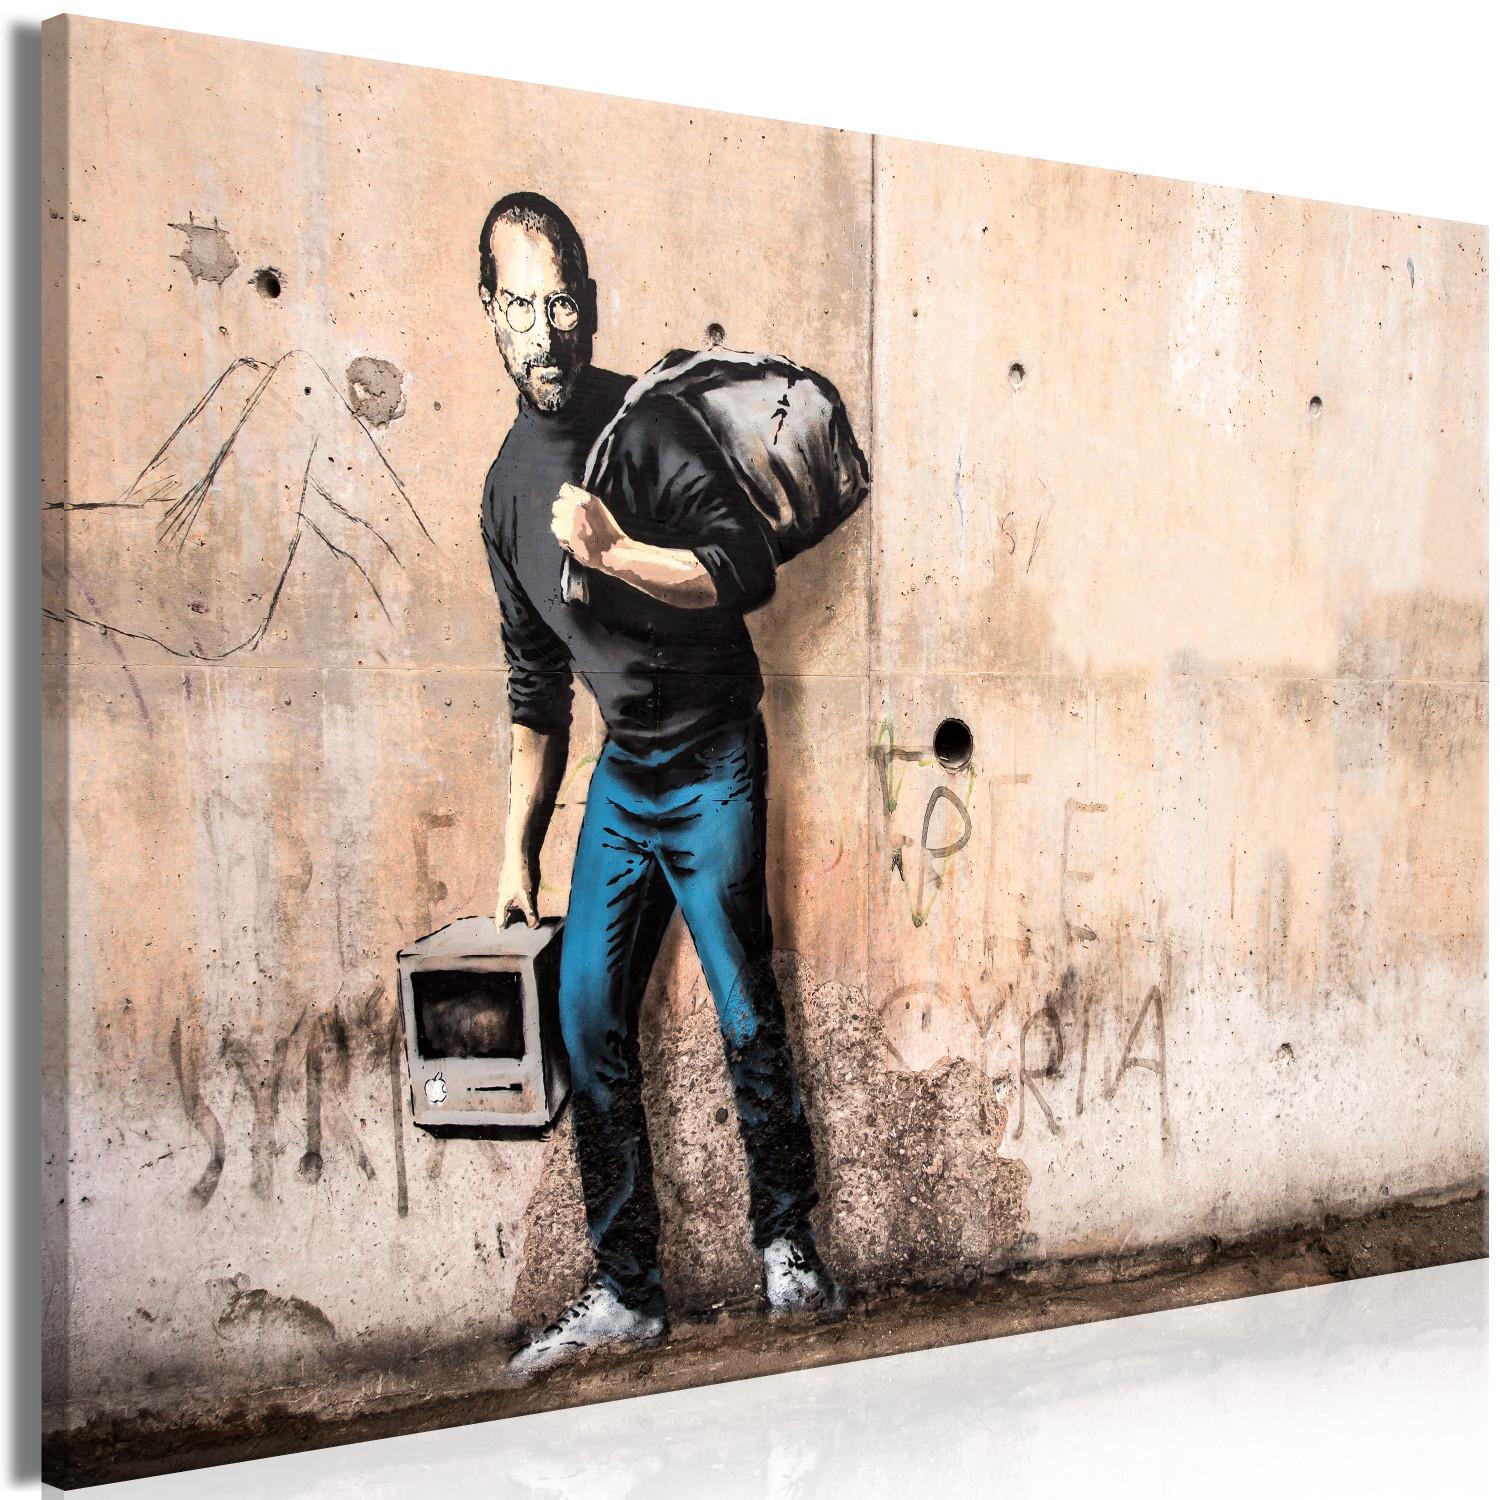 Canvas Steve (1-piece) Wide - street art of concrete with Steve Jobs' figure